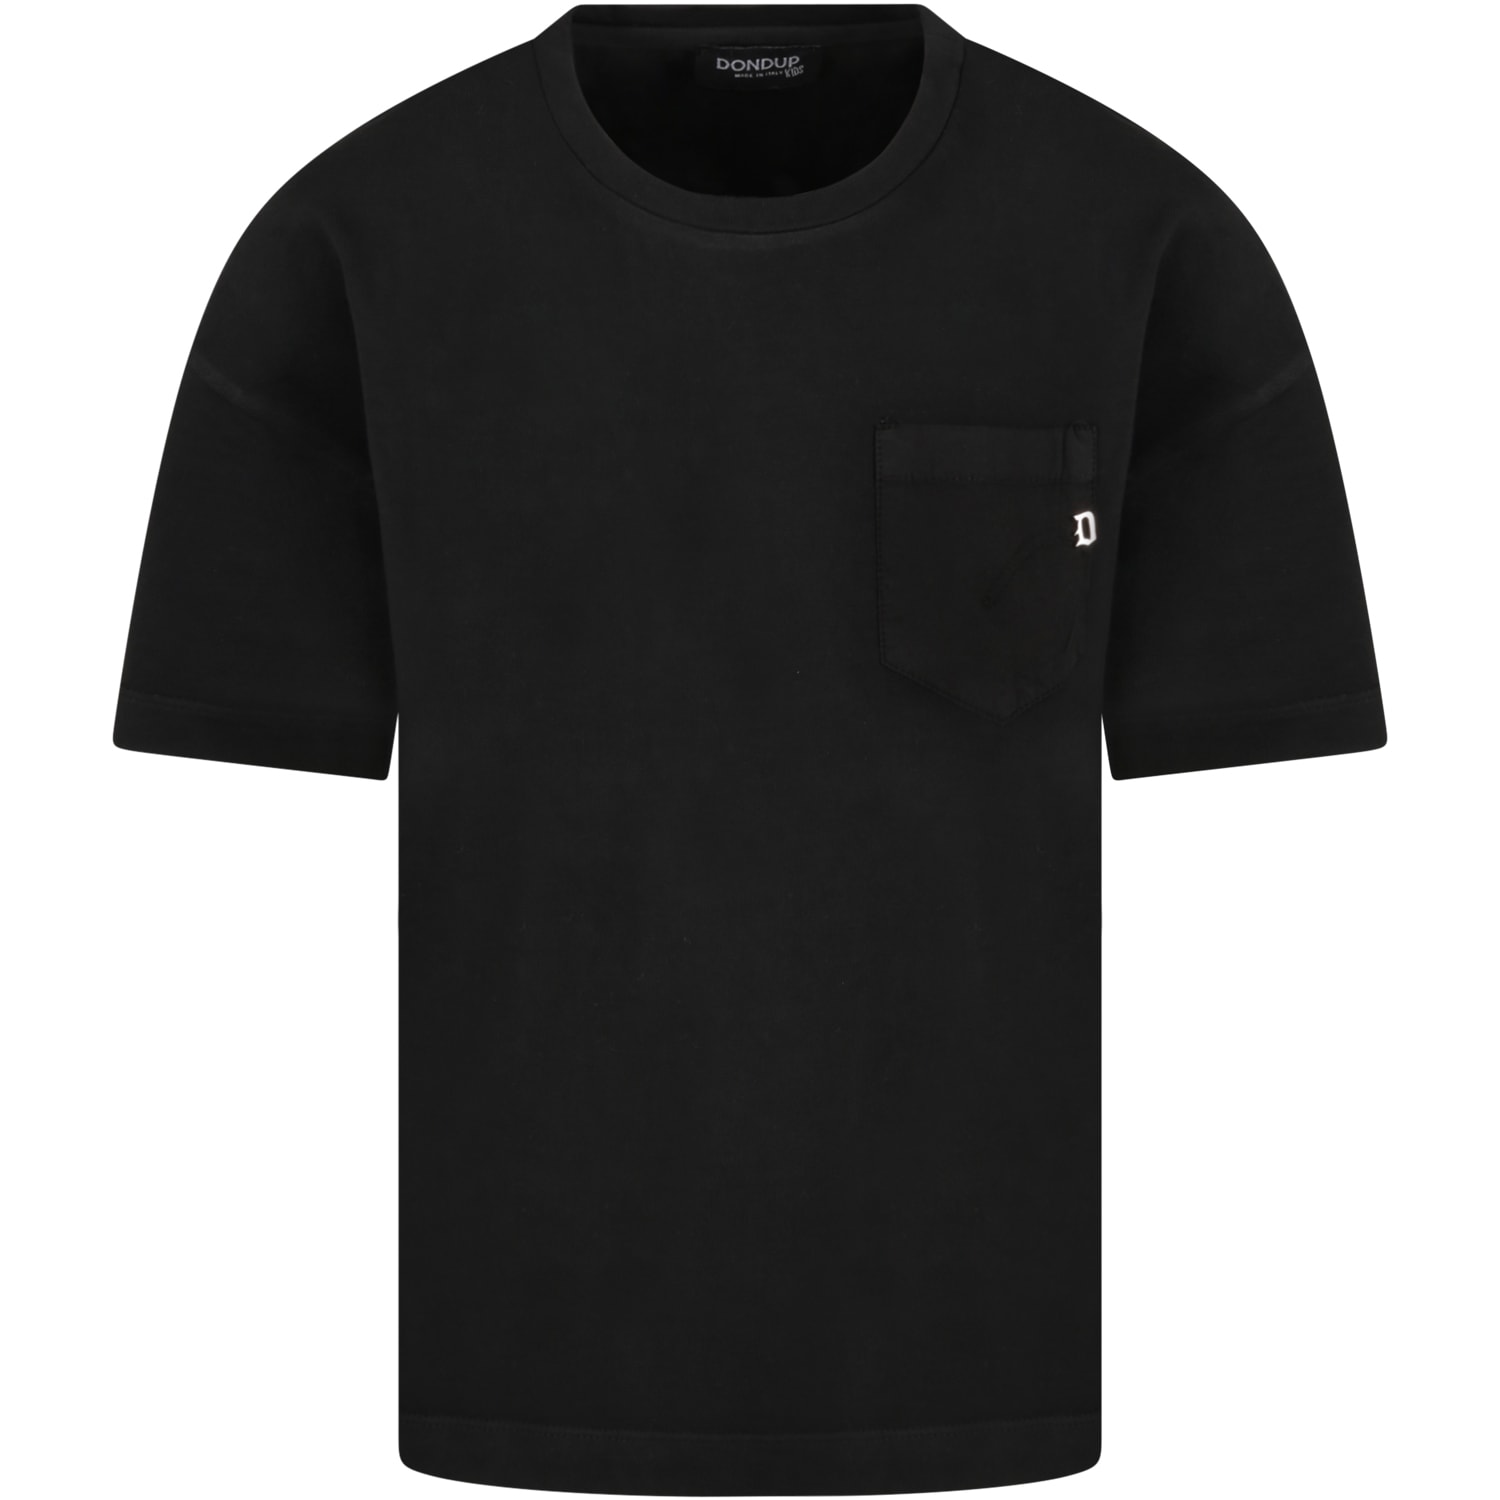 Dondup Black T-shirt For Boy